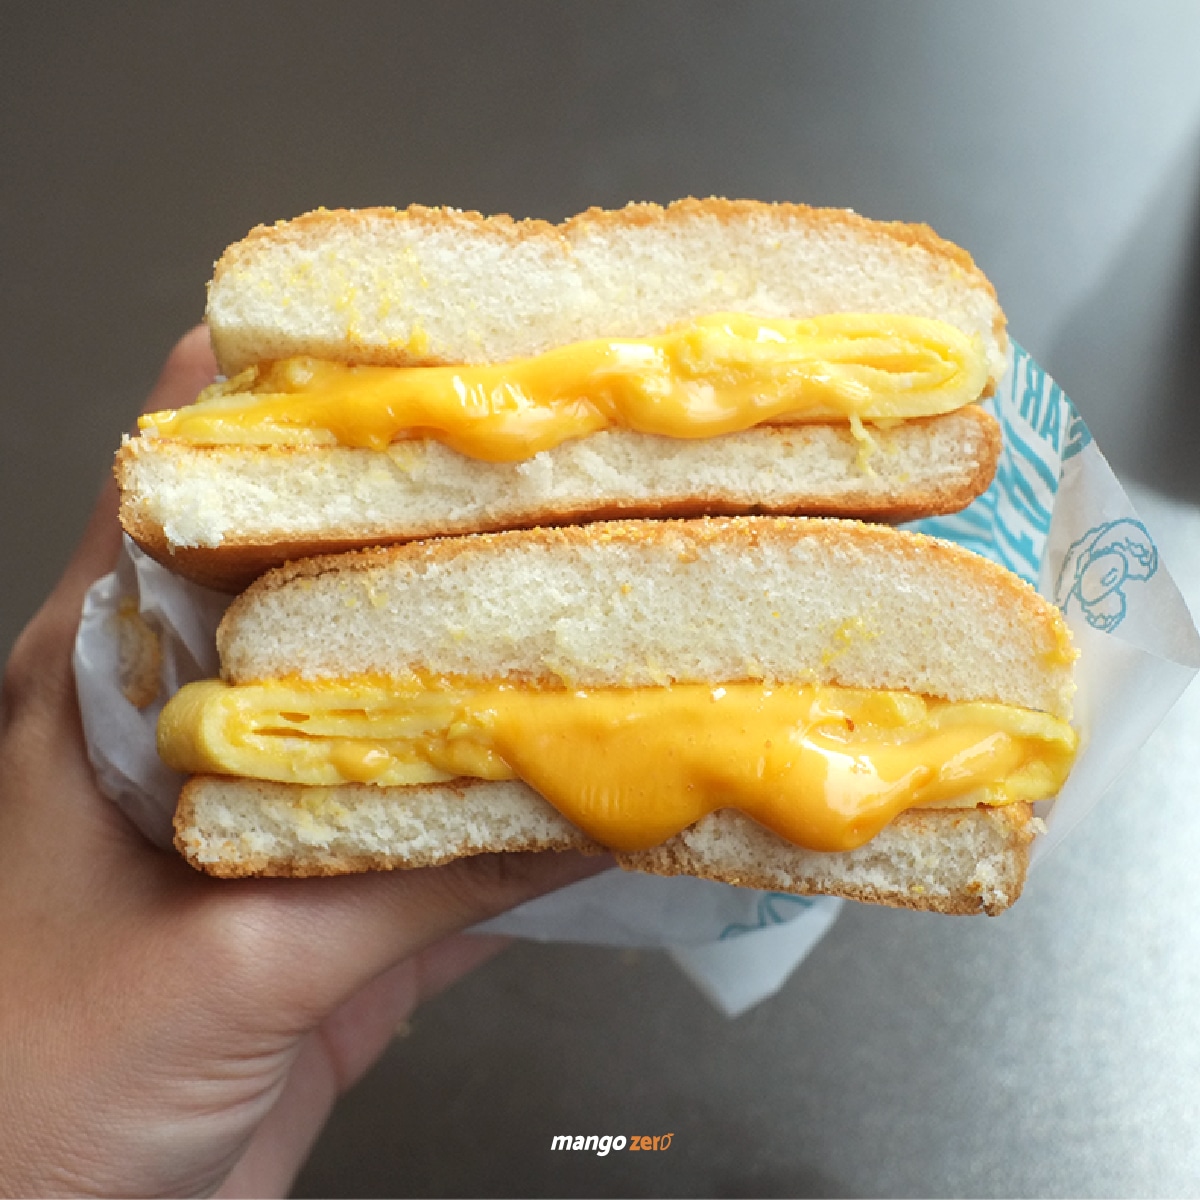 mcdonalds-cheesy-egg-bun-and-sweet-potato-desserts-03